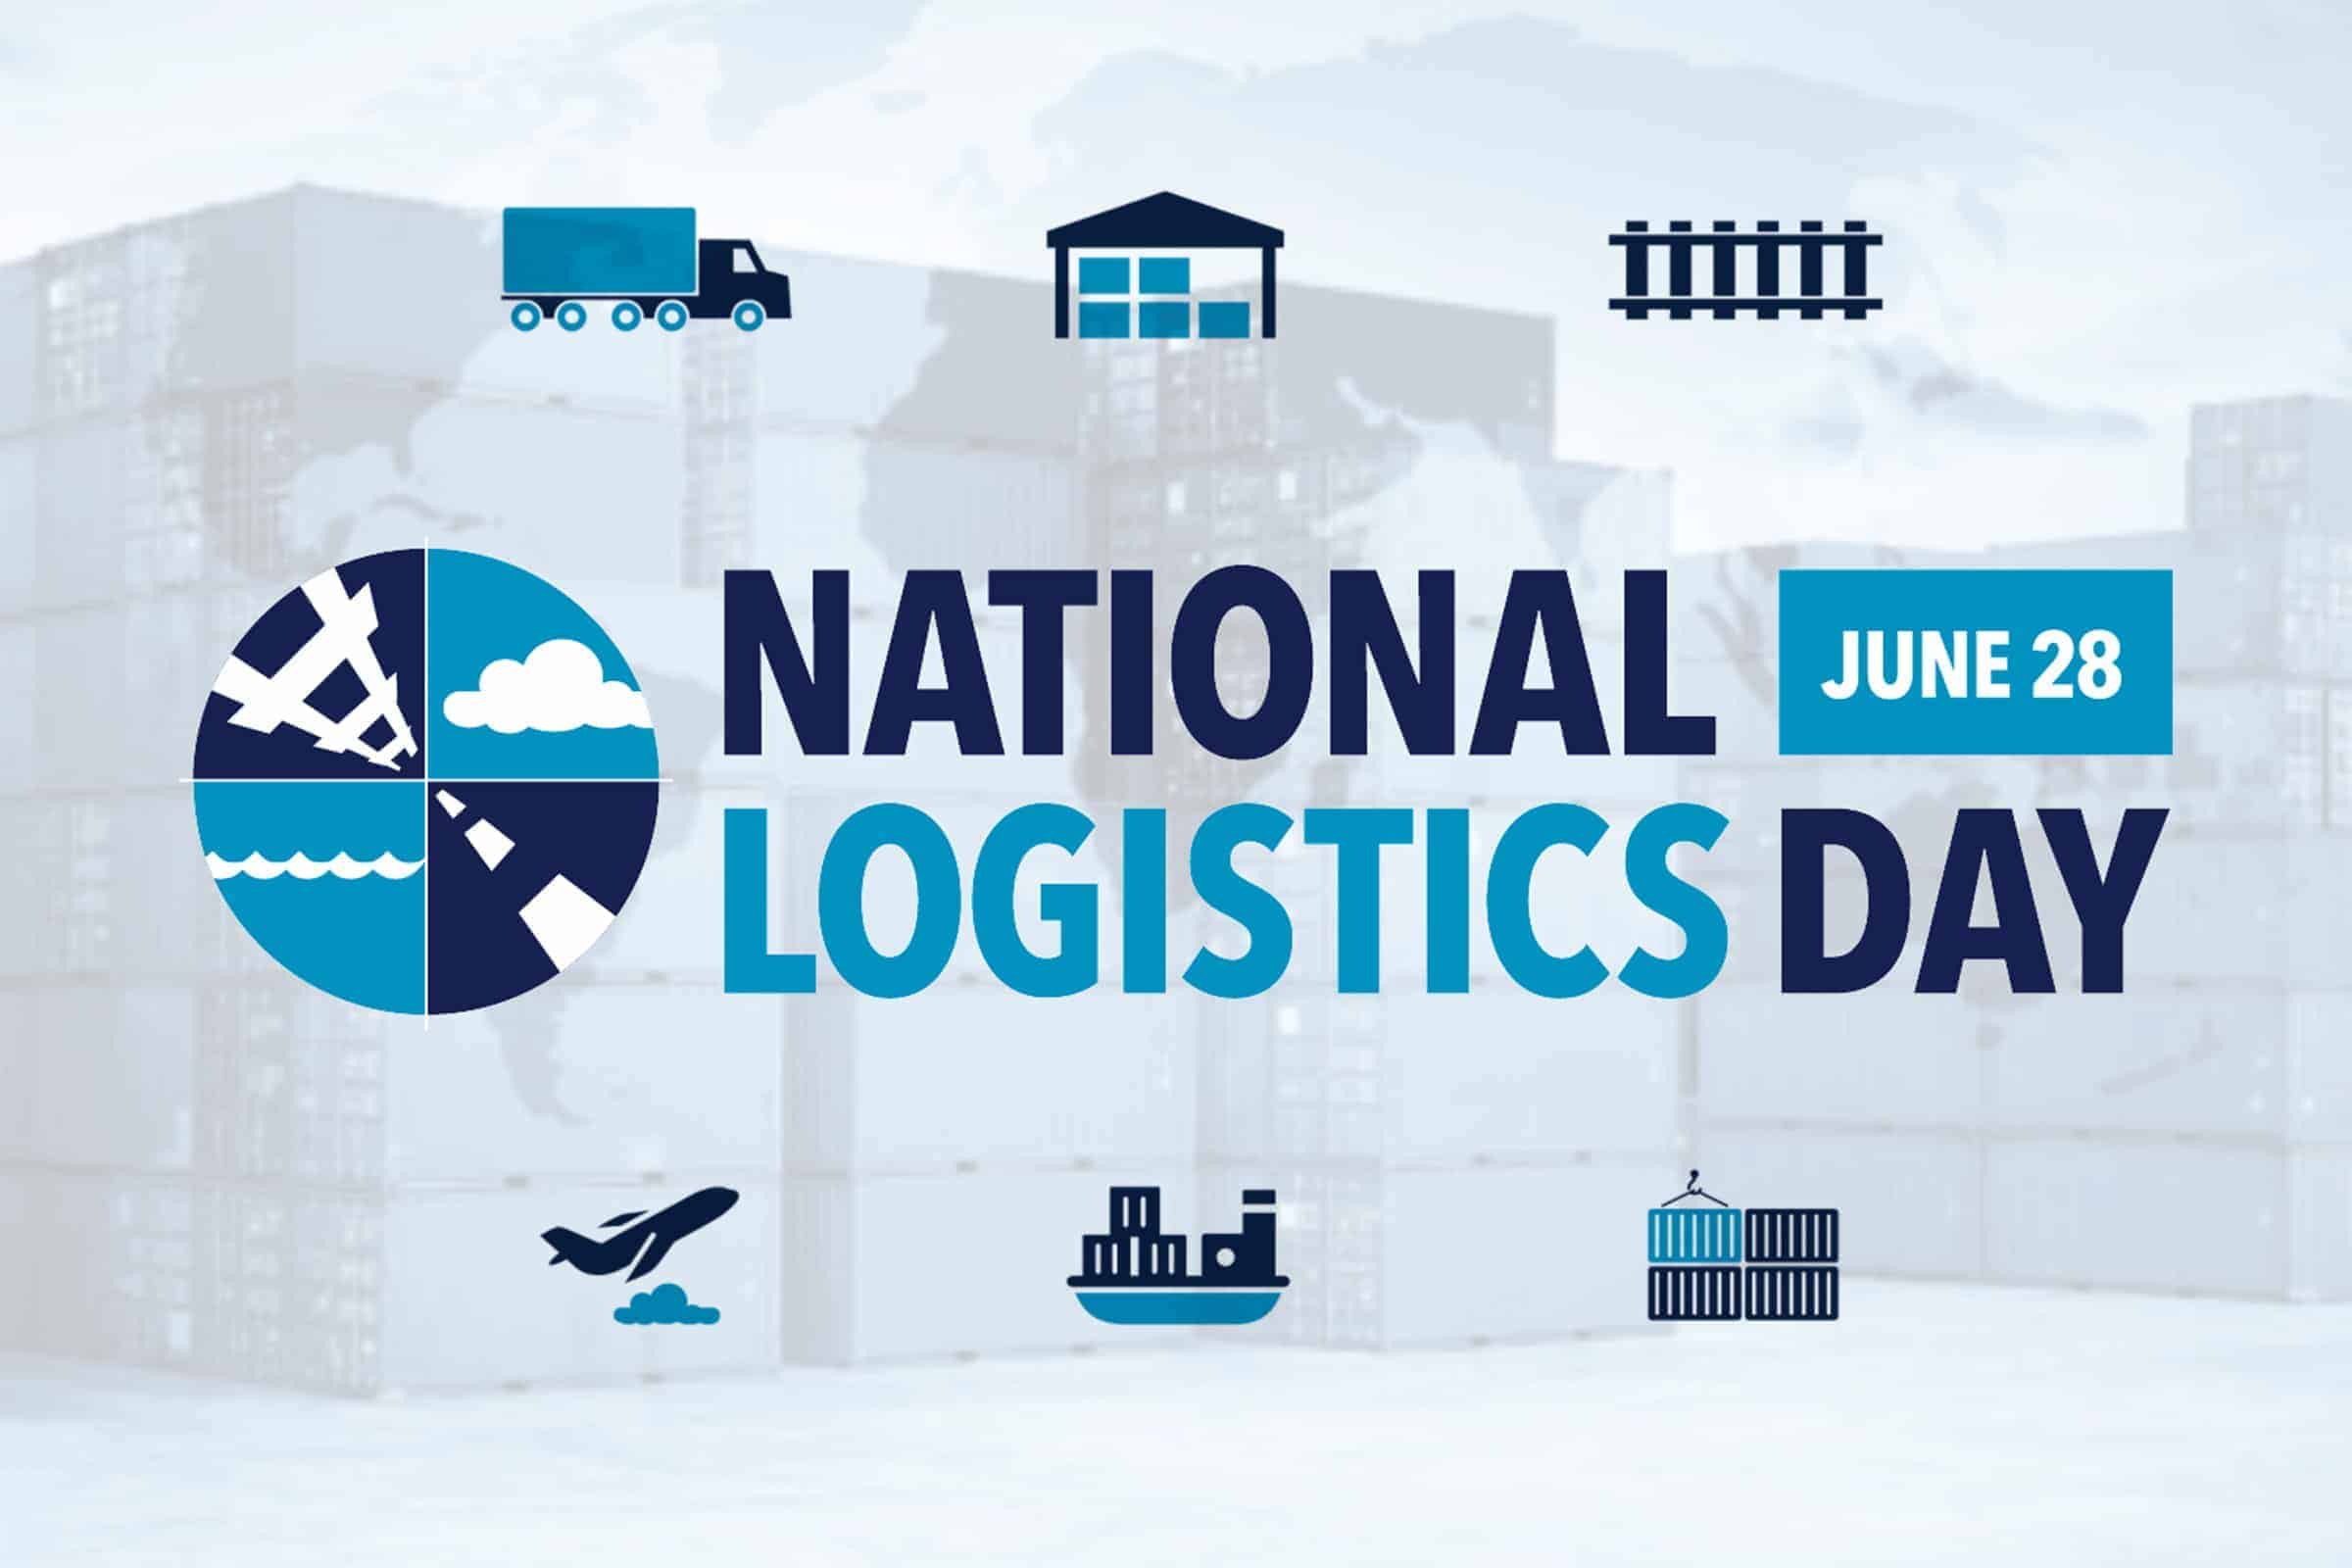 National Logistics Day, June 28, recognizes importance of logistics